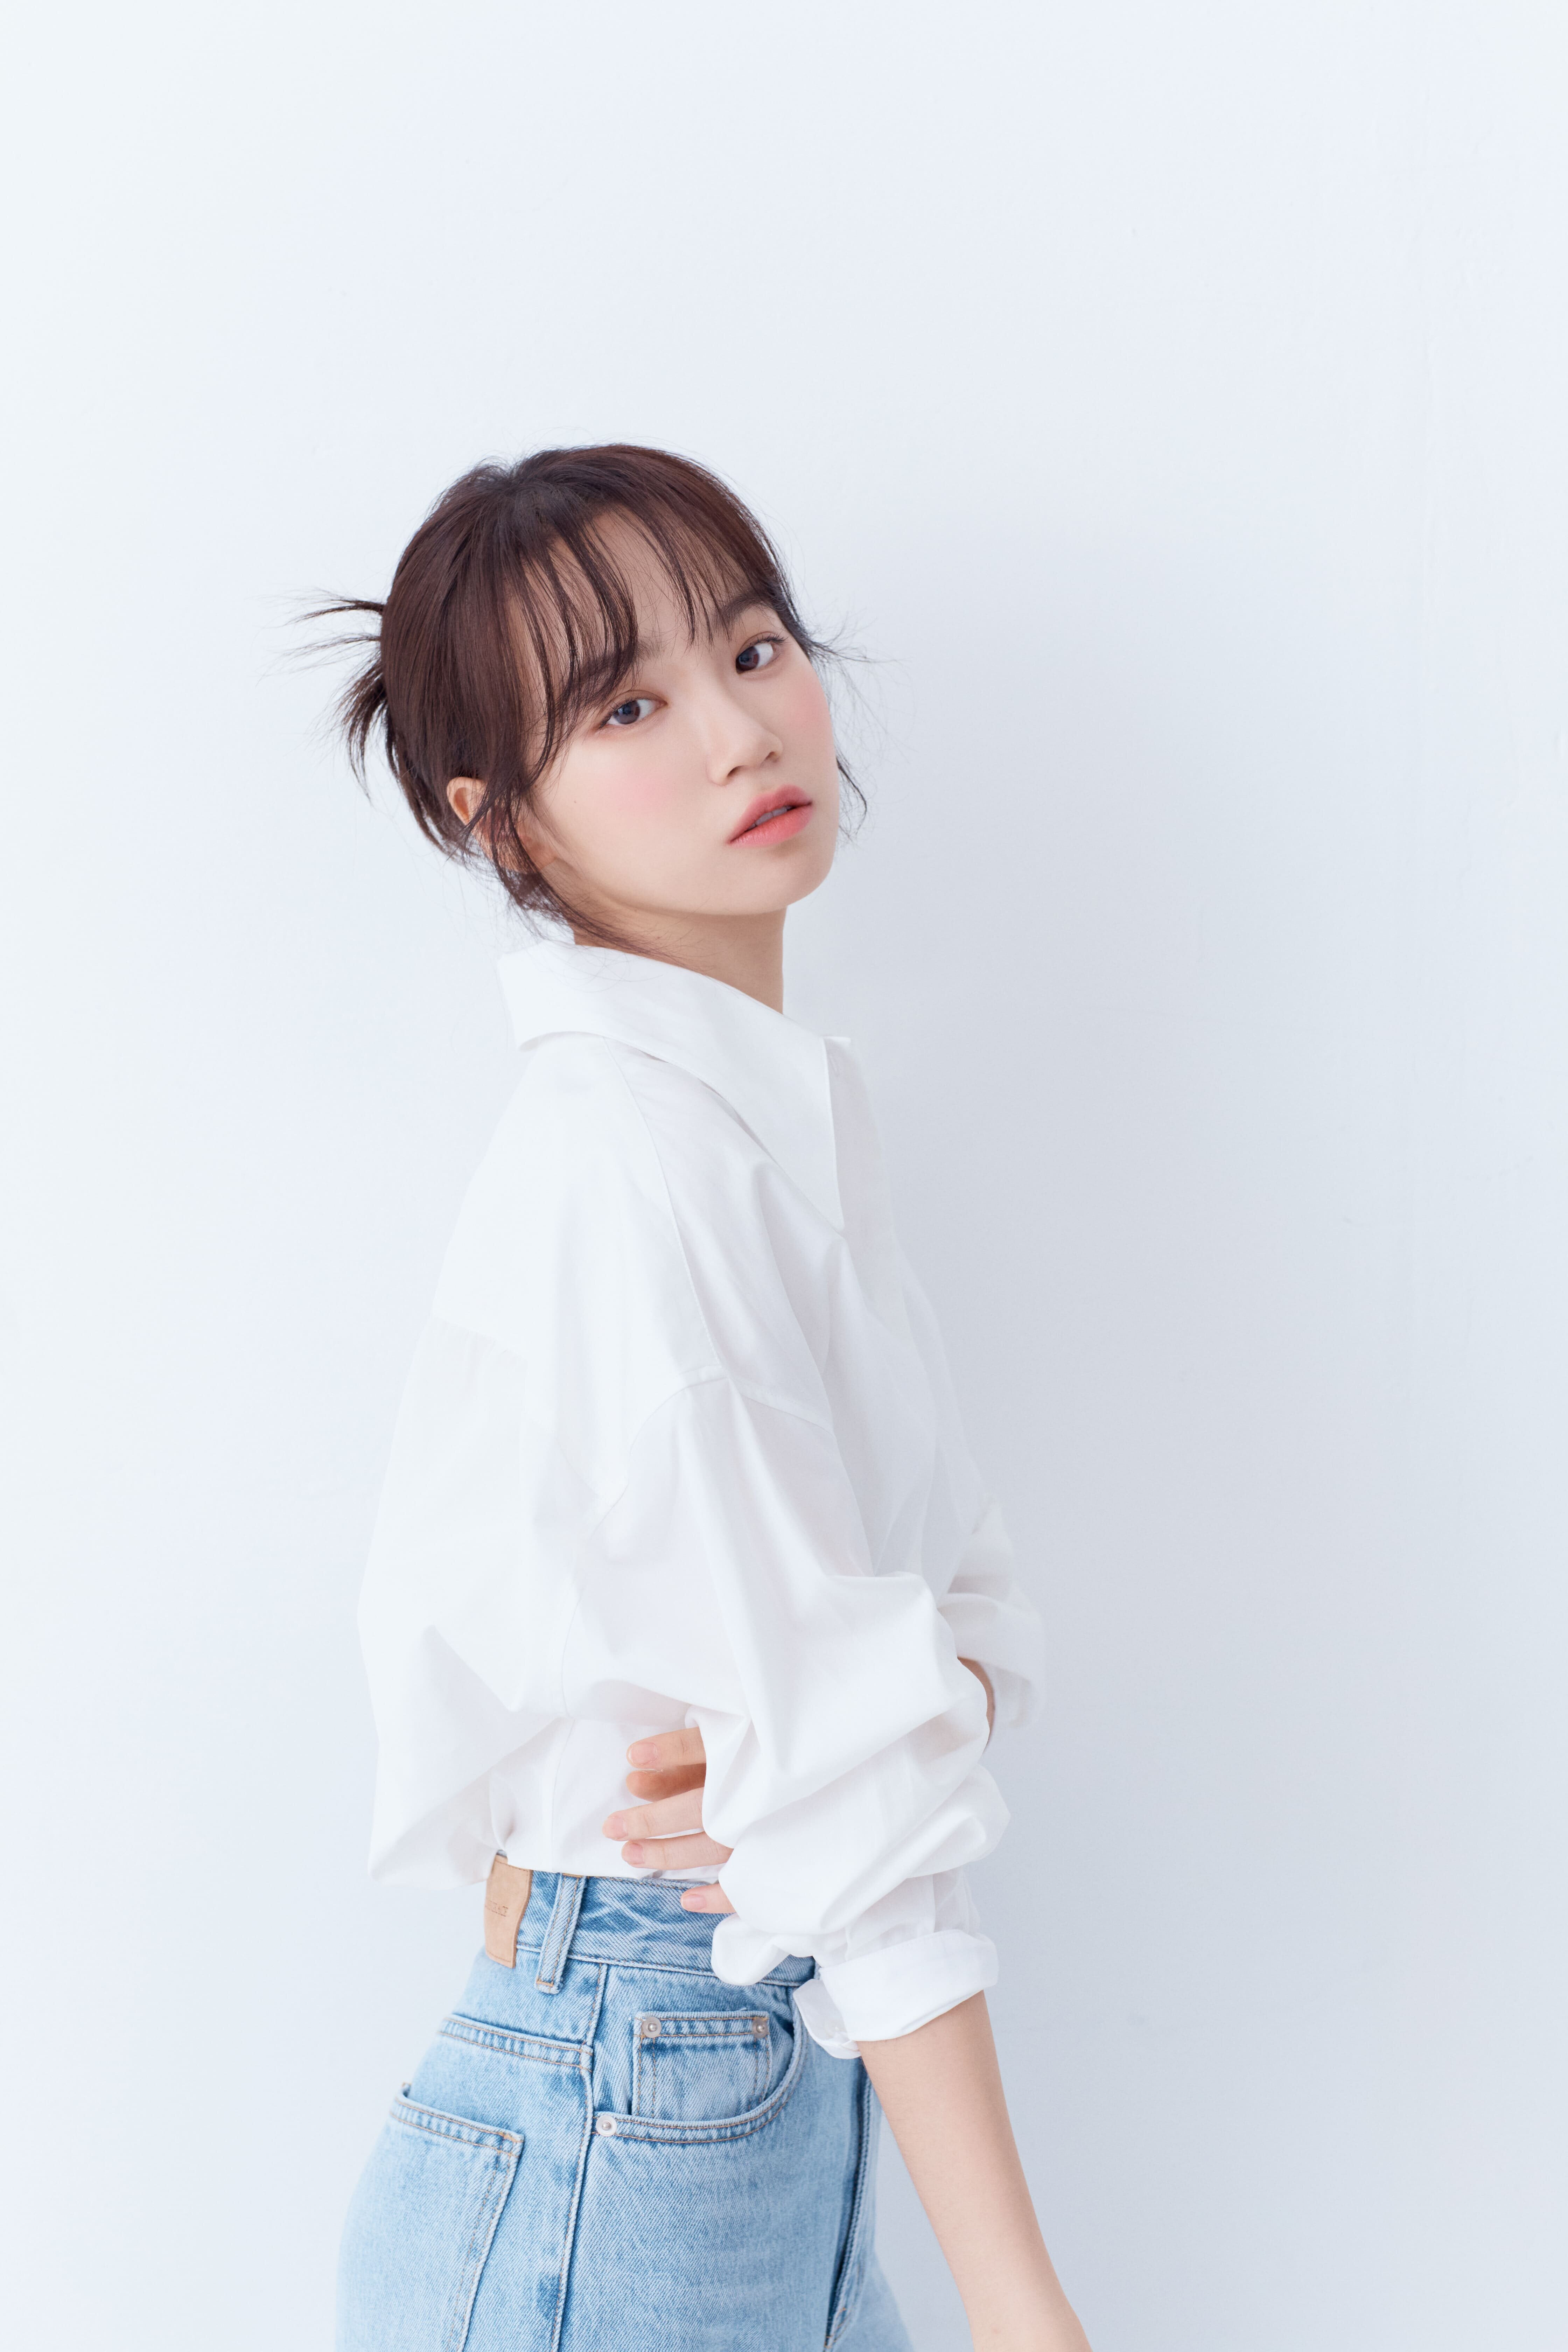 Kim Chaewon 2021 Woollim Profile Photos | Kpopping